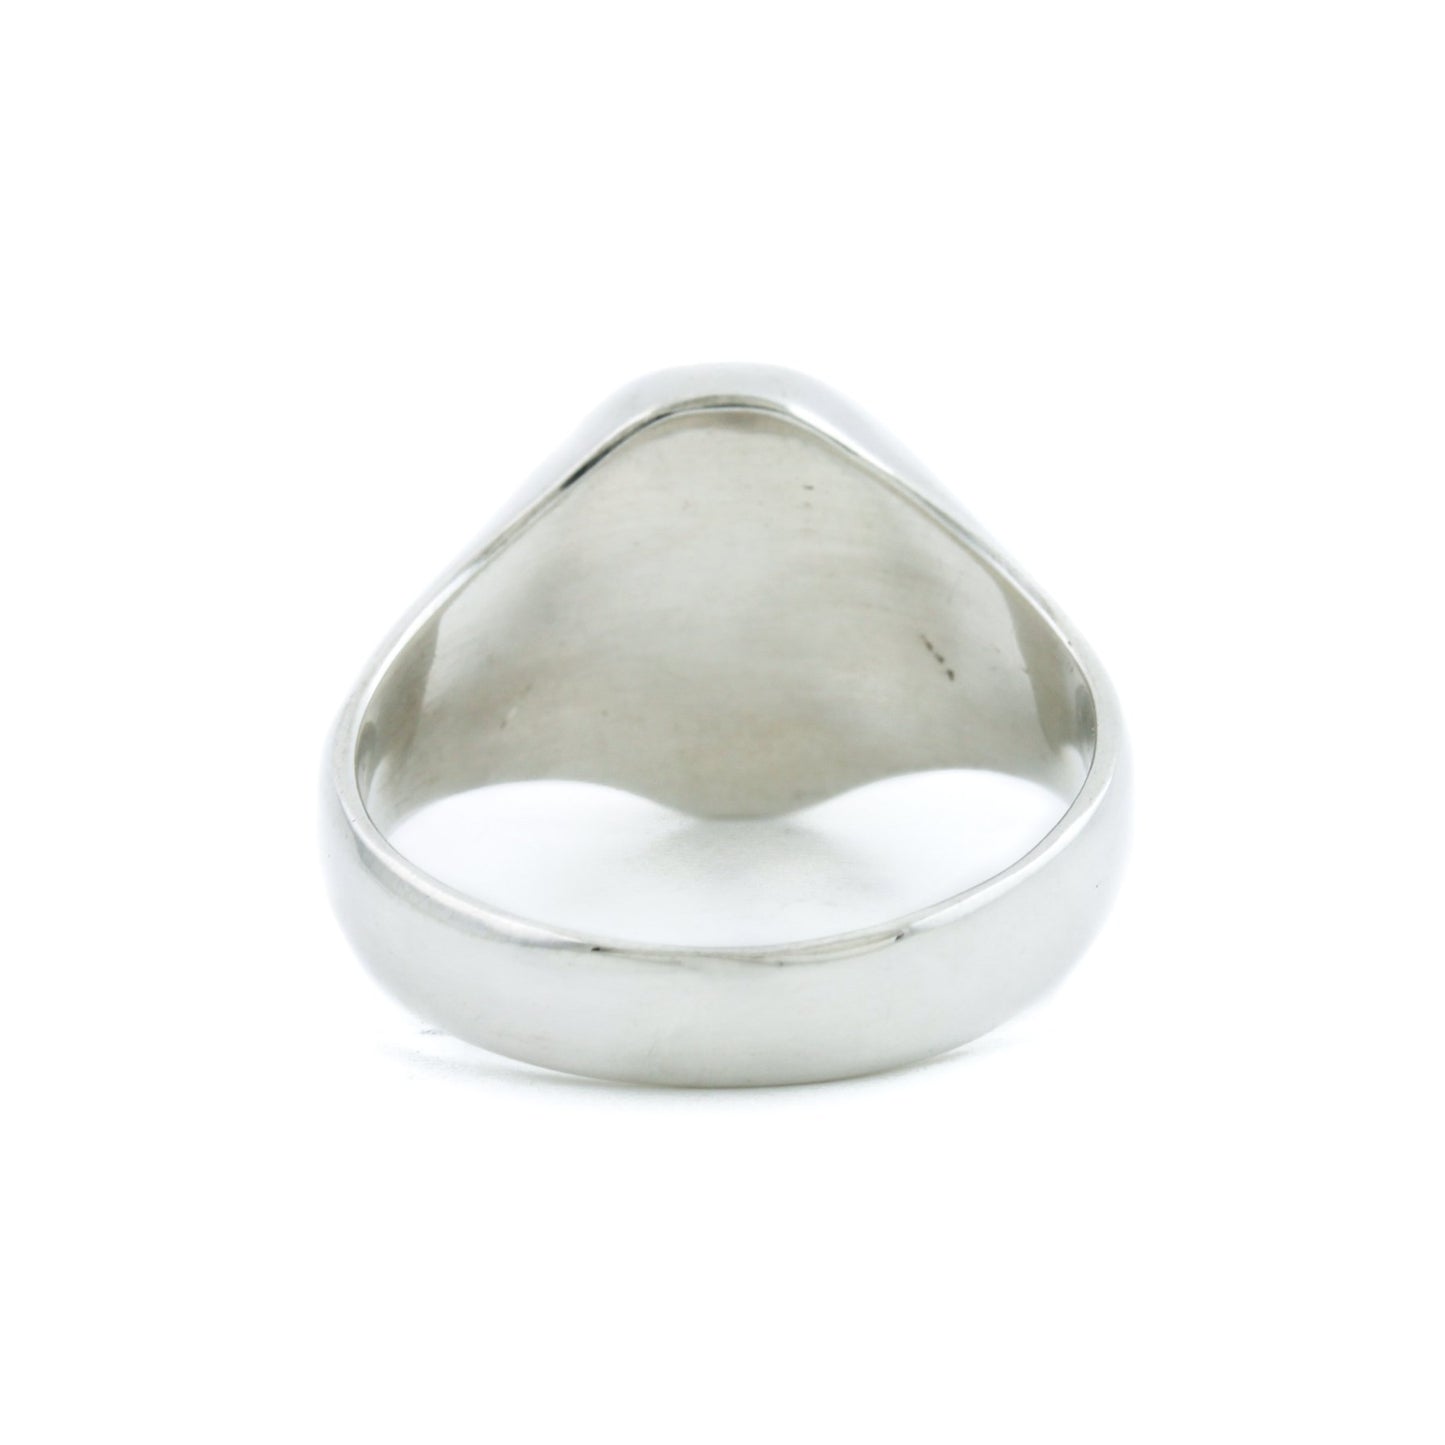 Silver "Moon" Wax Seal Crest Signet Ring - Kingdom Jewelry